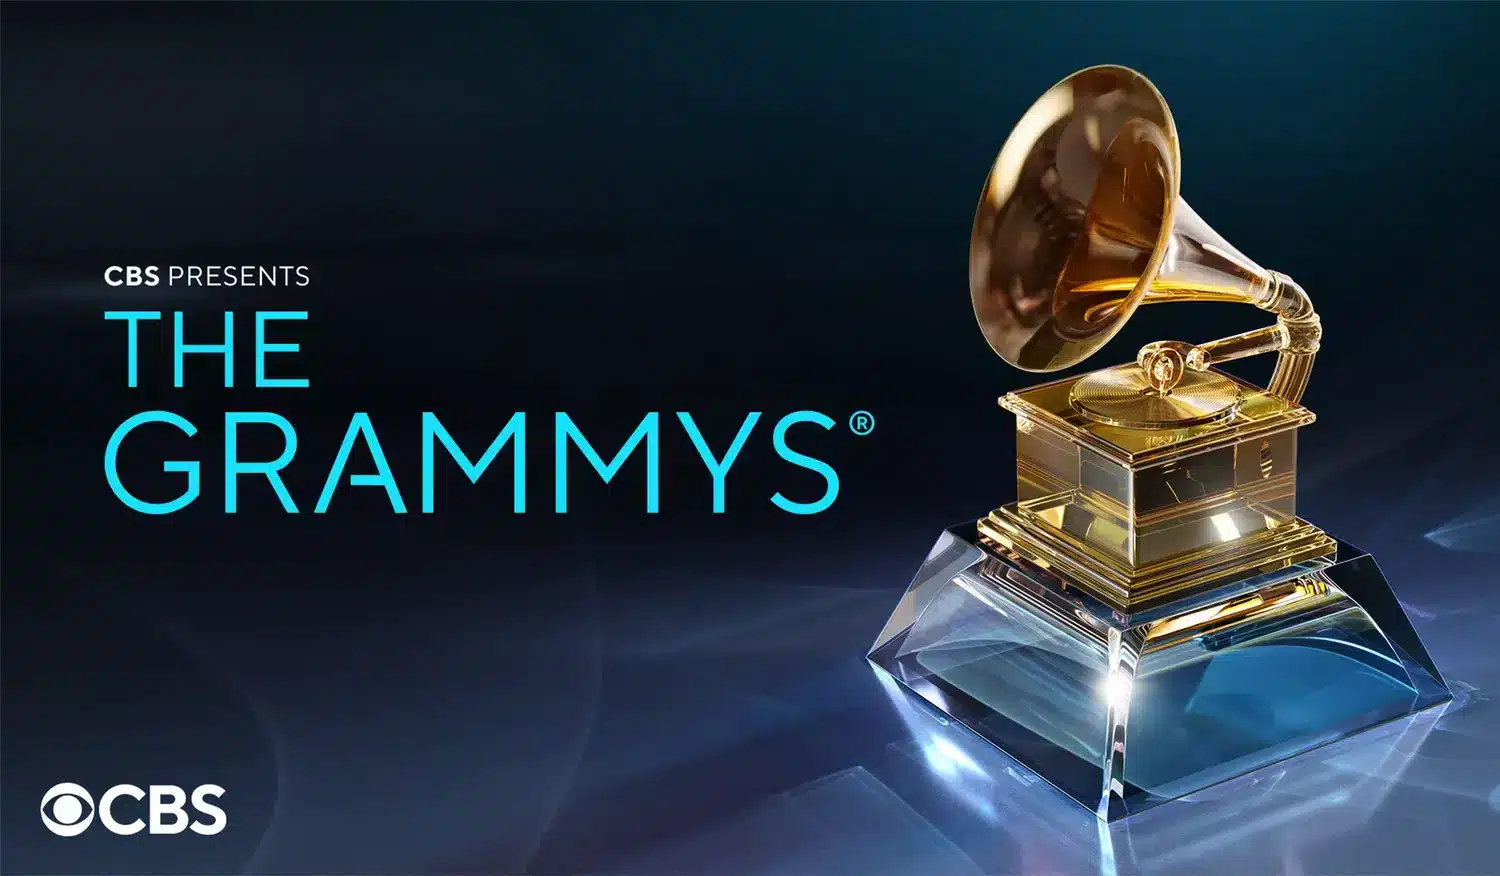 Grammy's presented by CBS.